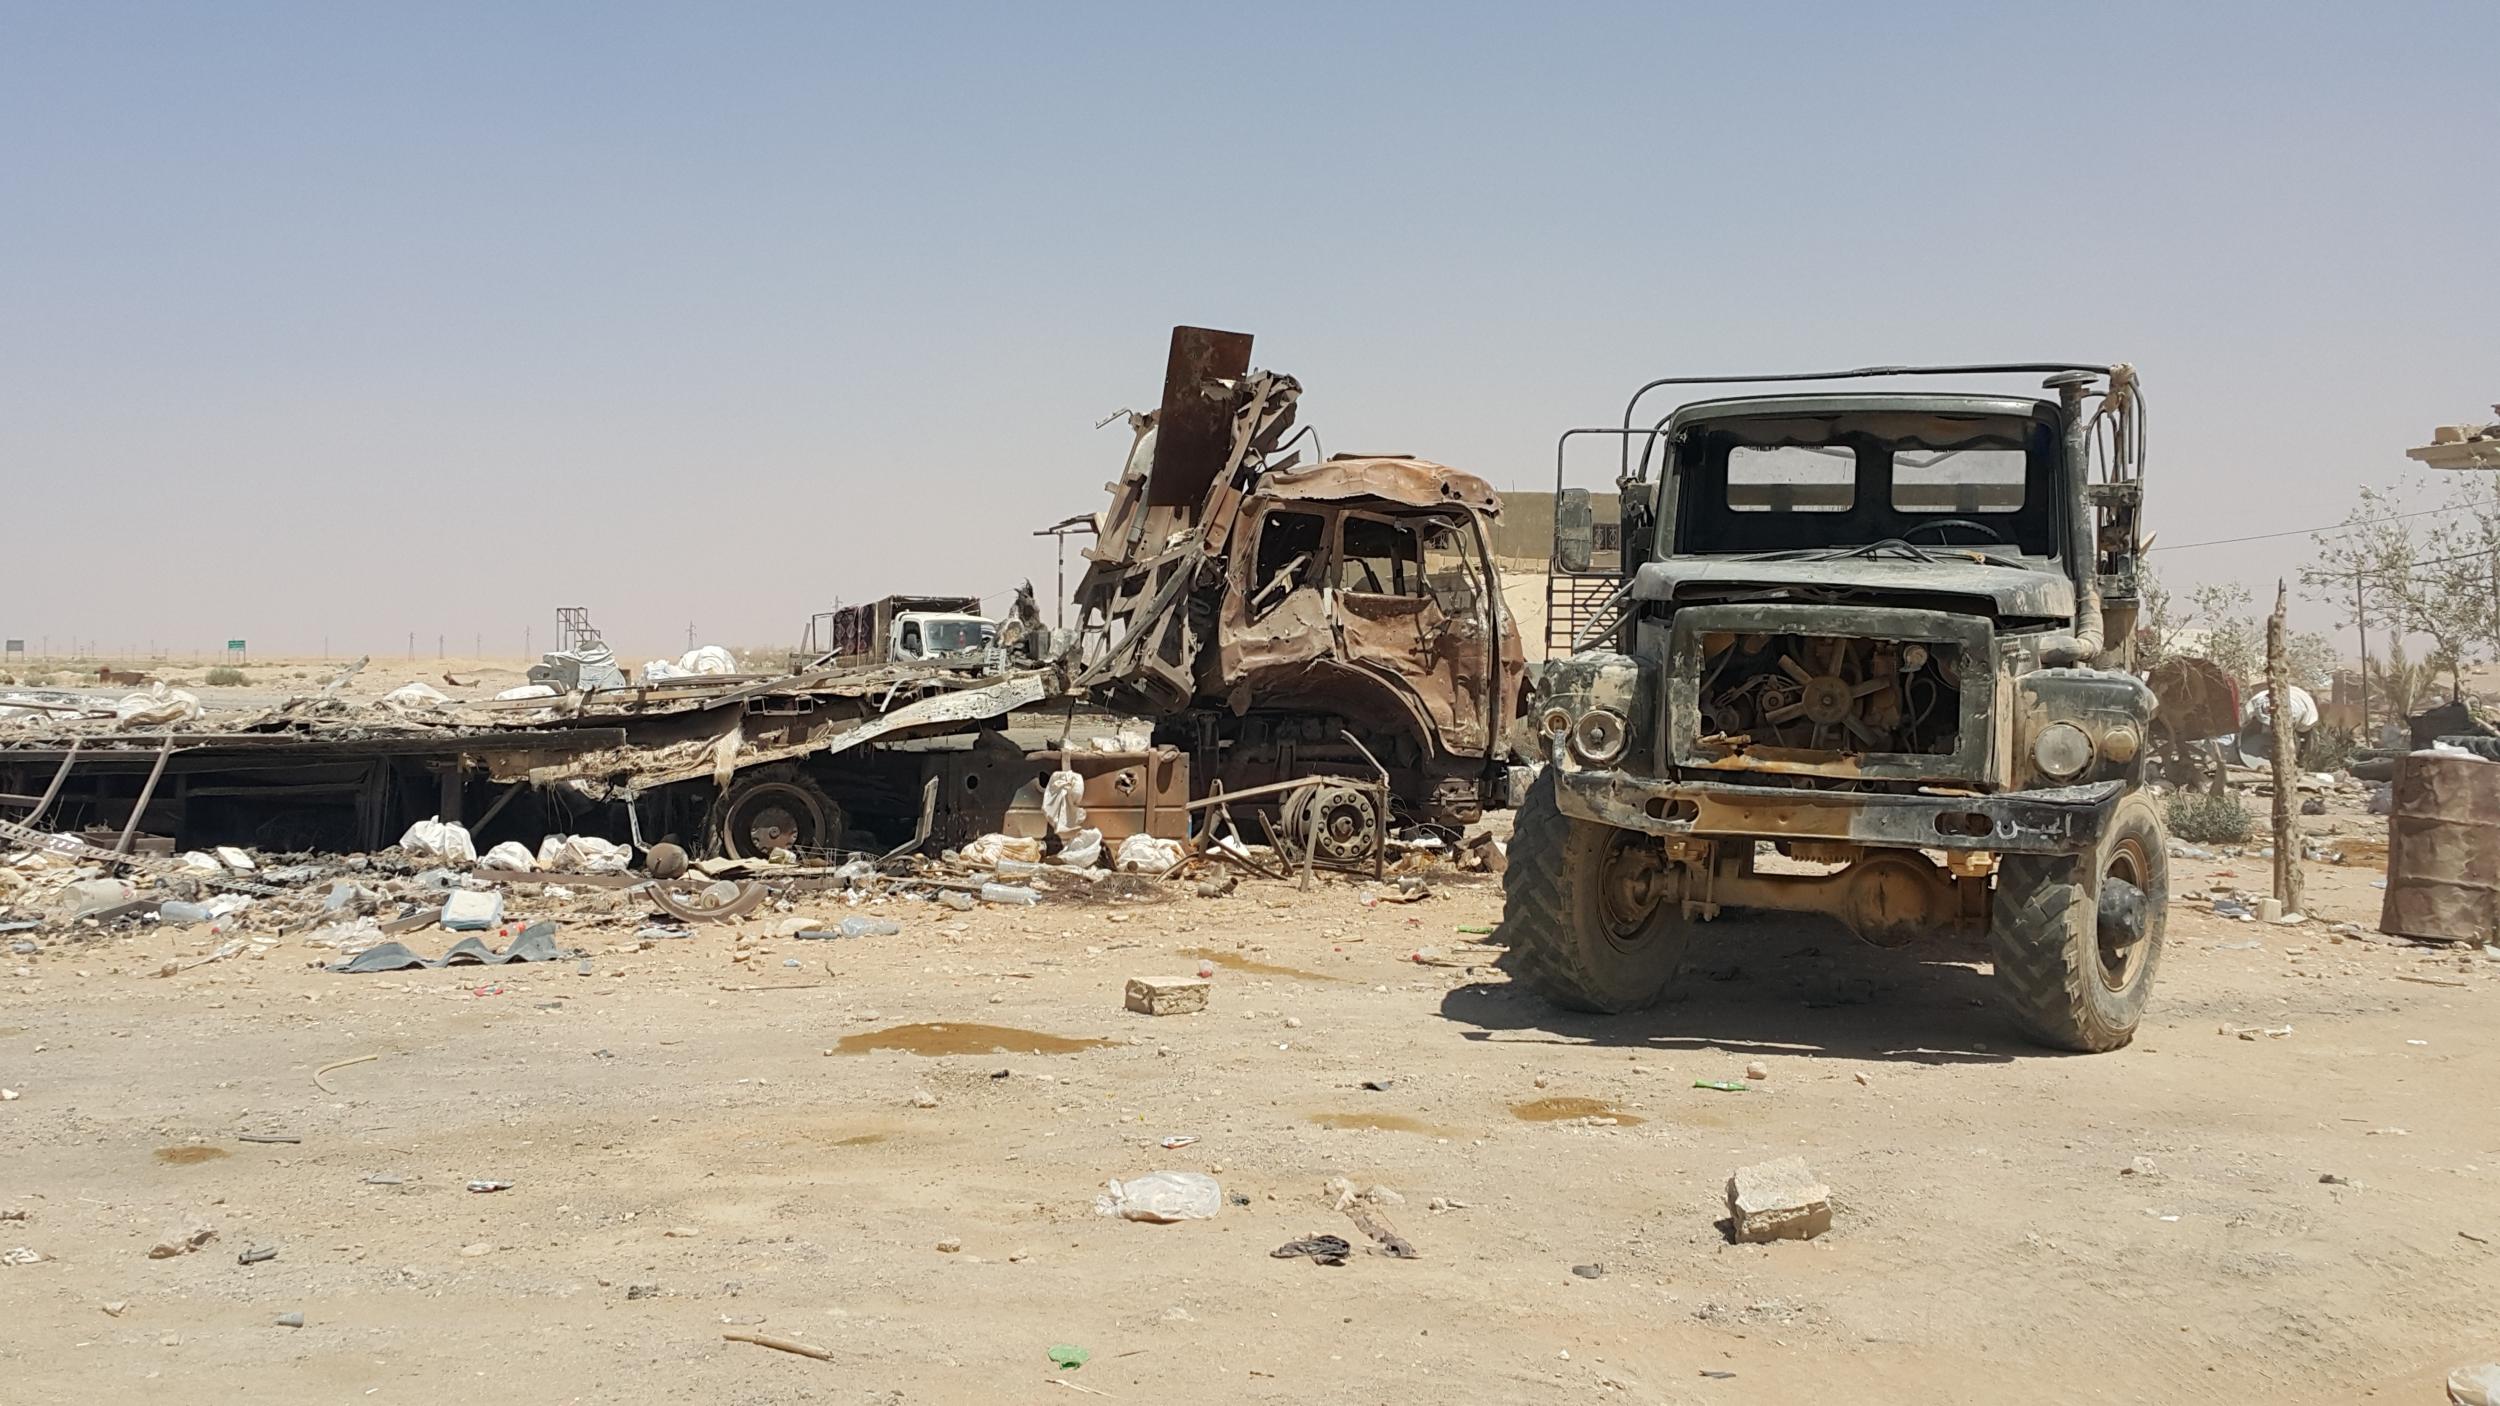 Wreckage of war on the desert highway to Deir ez-Zour